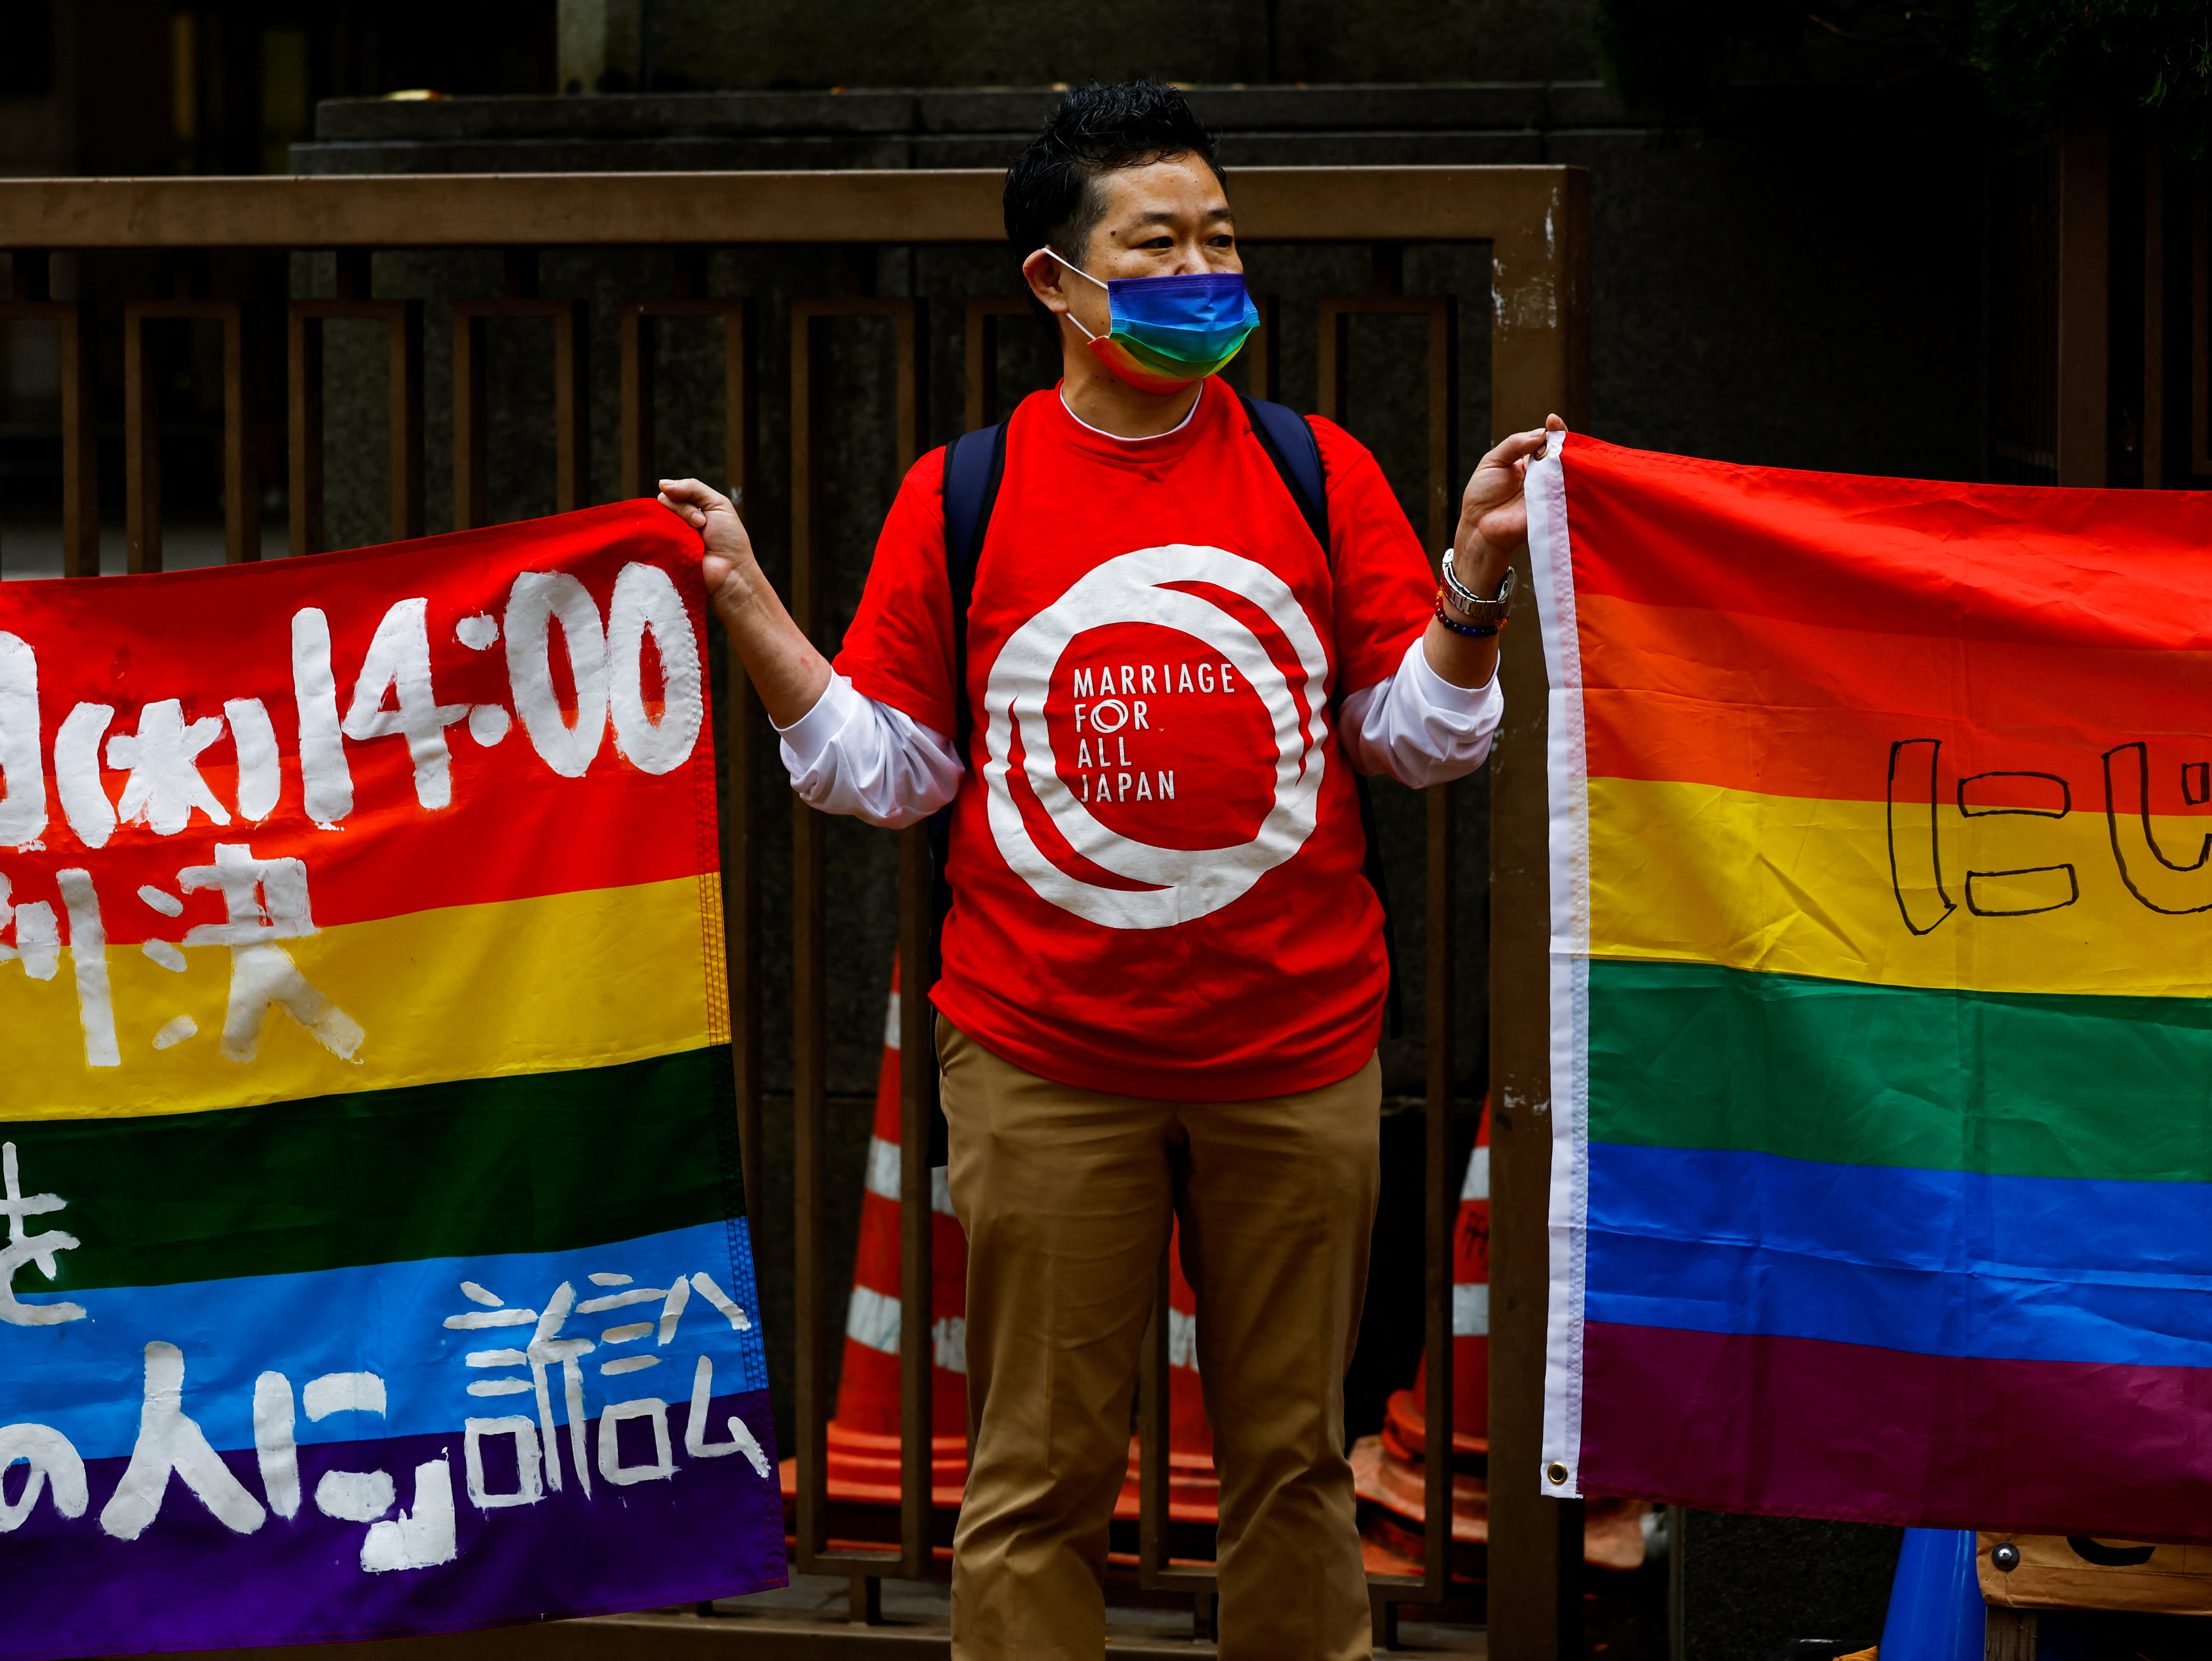 Pornonxxxn - Japan court upholds ban on same-sex marriage but voices rights concern |  Reuters